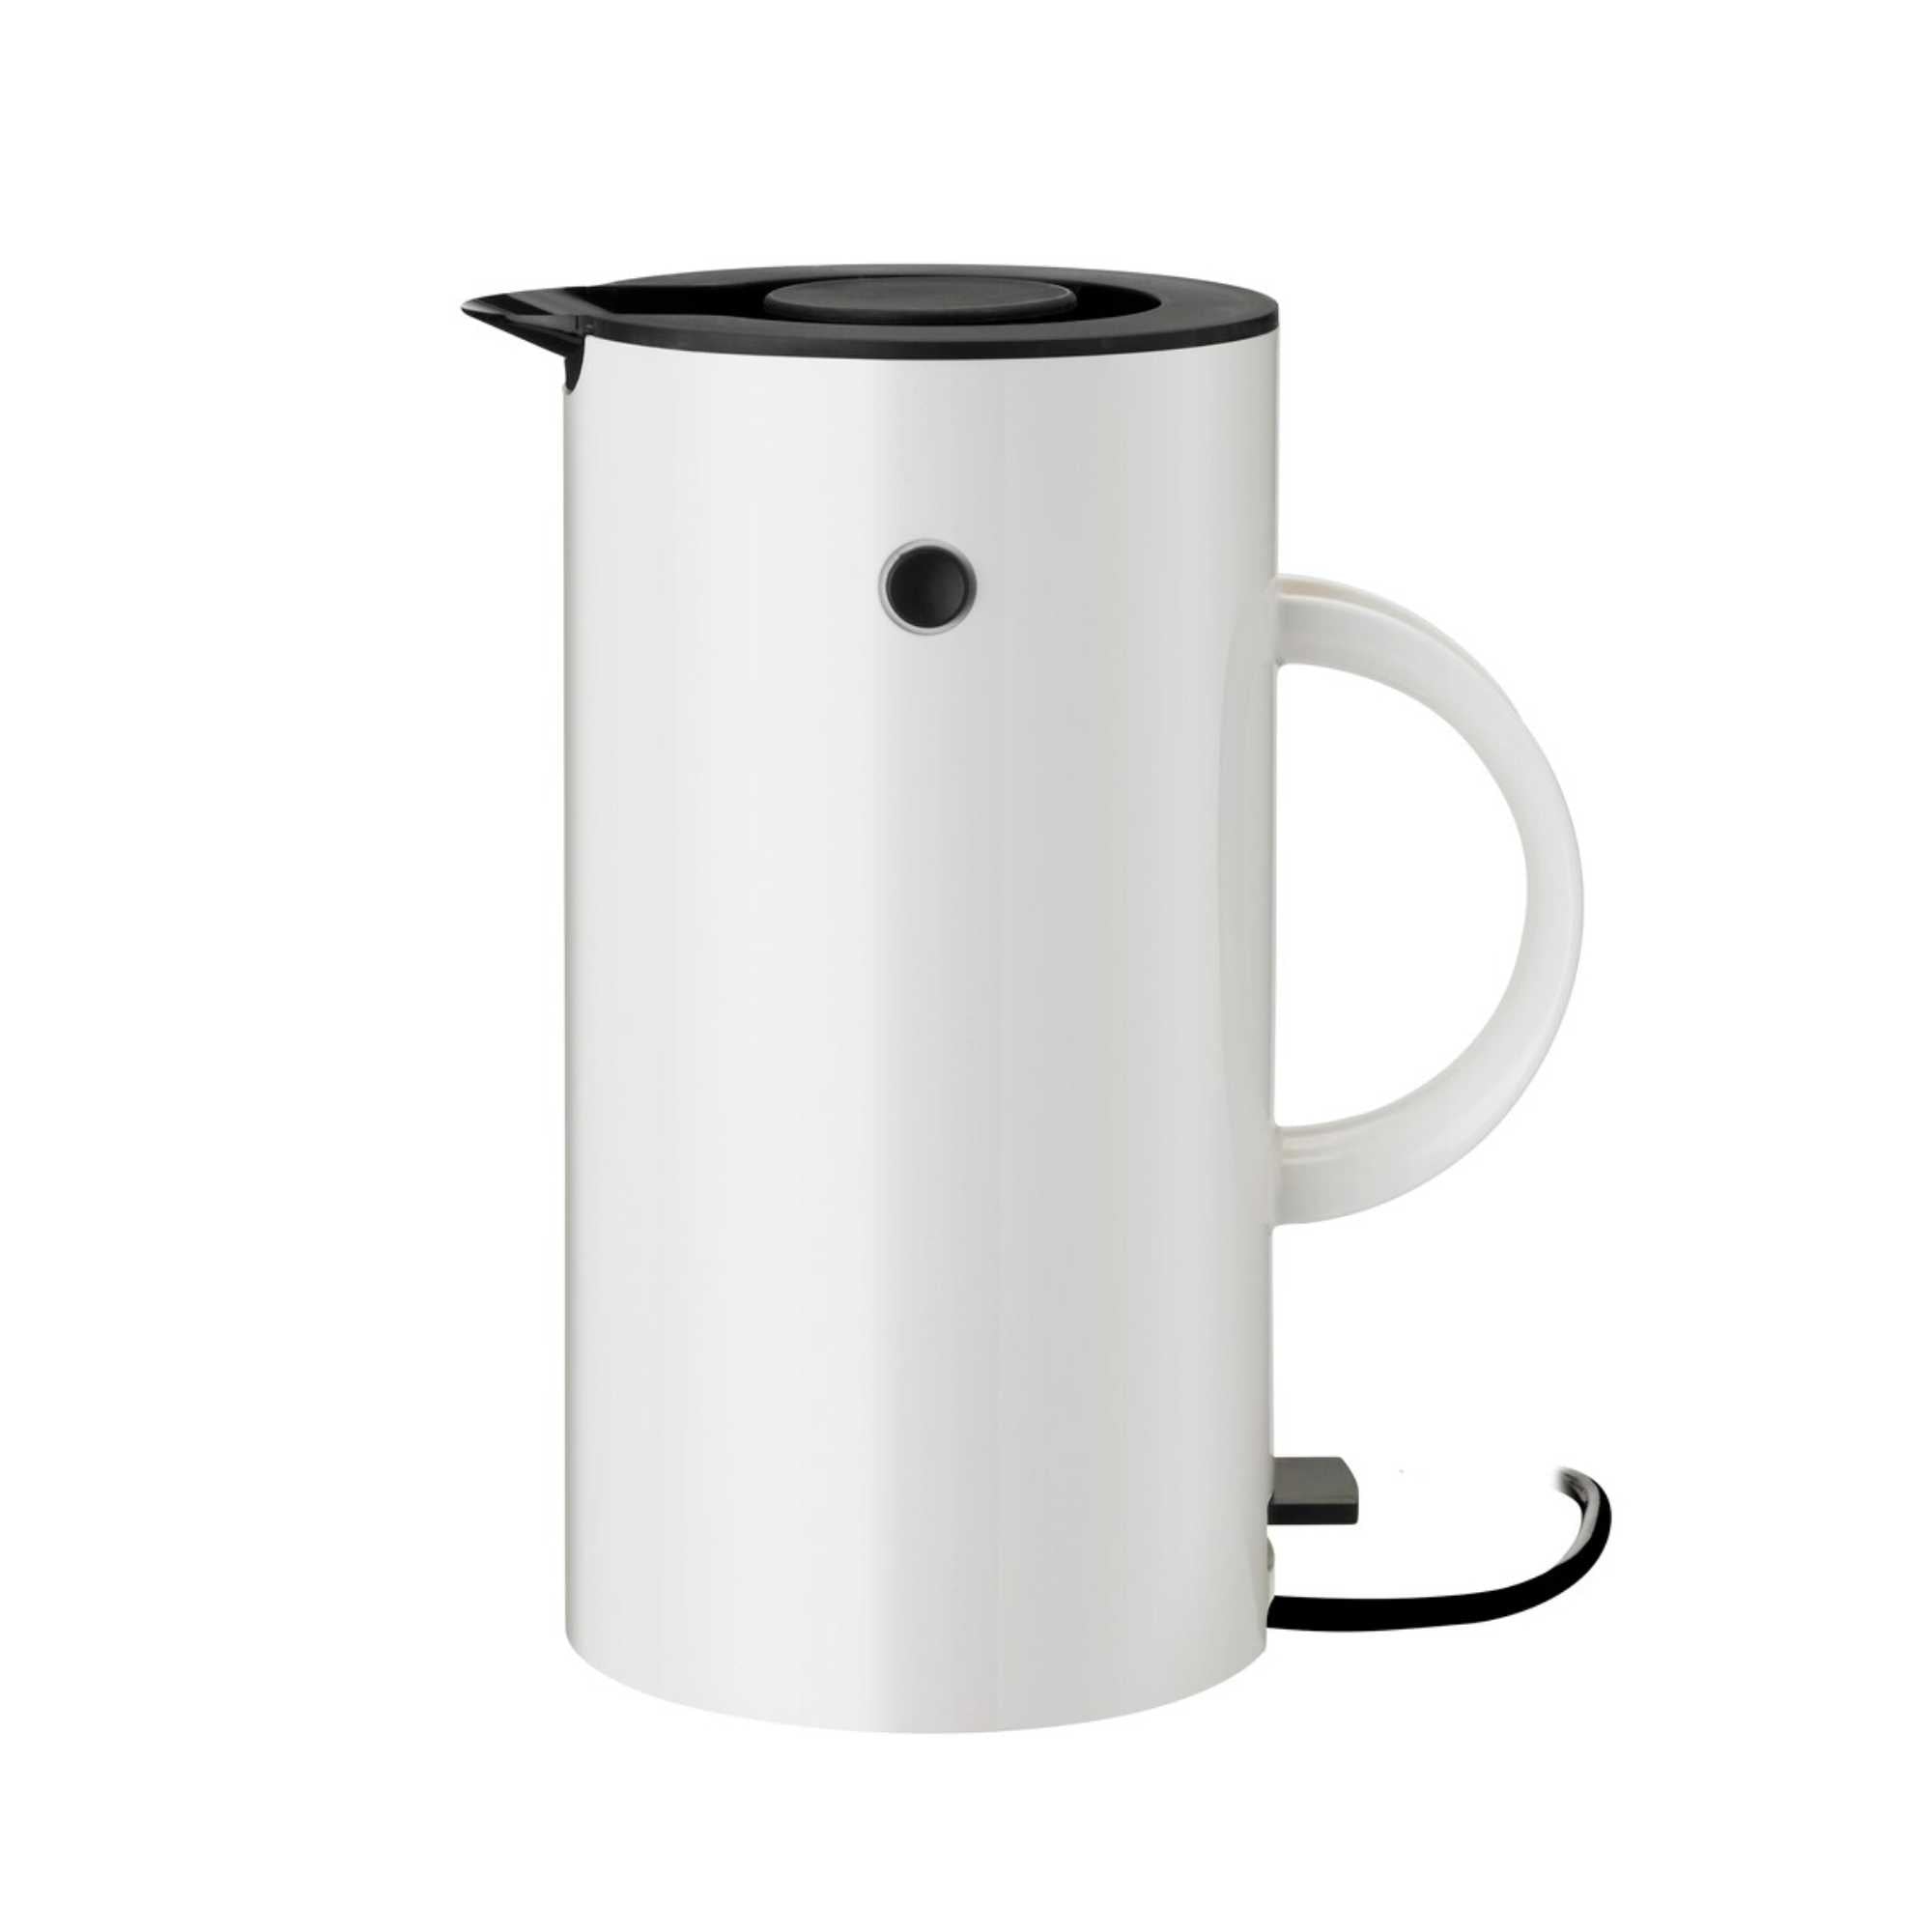 Stelton EM77 electric kettle, white (1.5 litre)